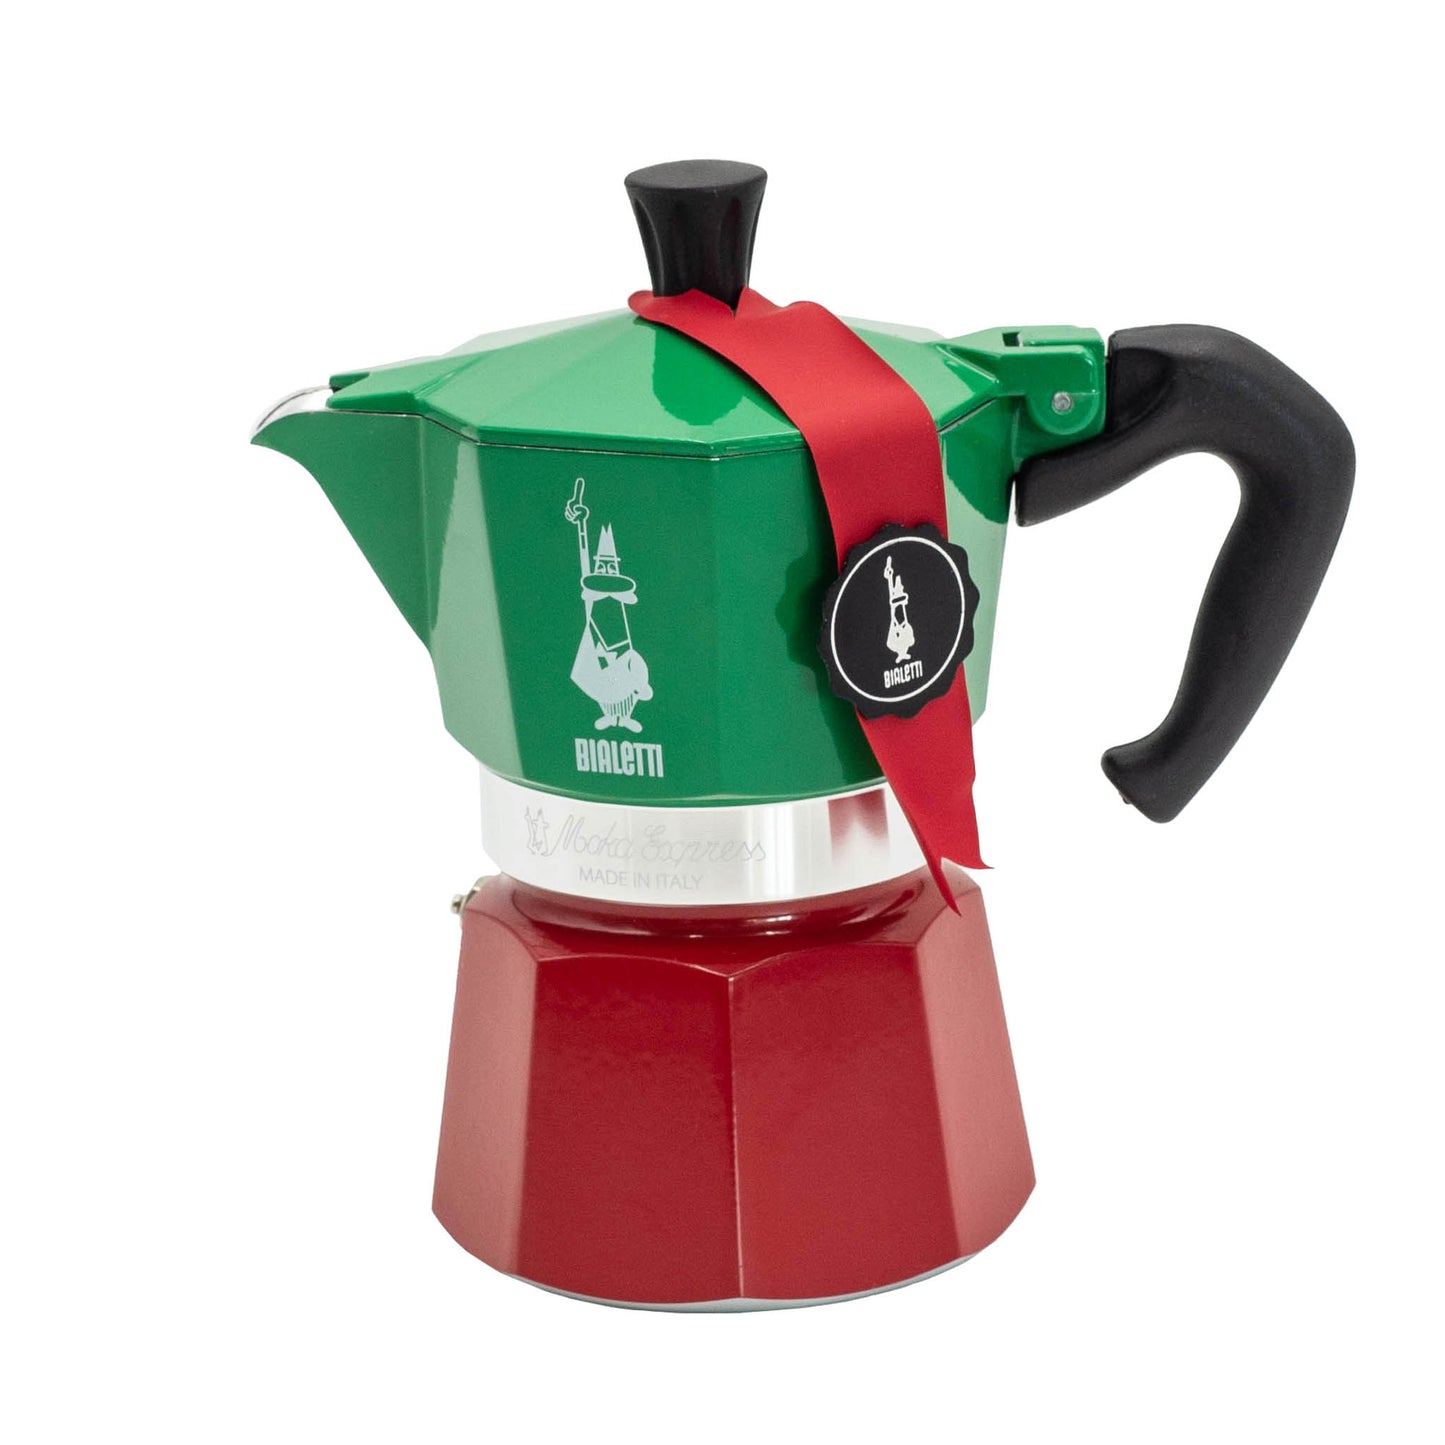 Six Cup Bialetti Moka express Italia Model. For perfect stove top espresso coffee in minutes. 